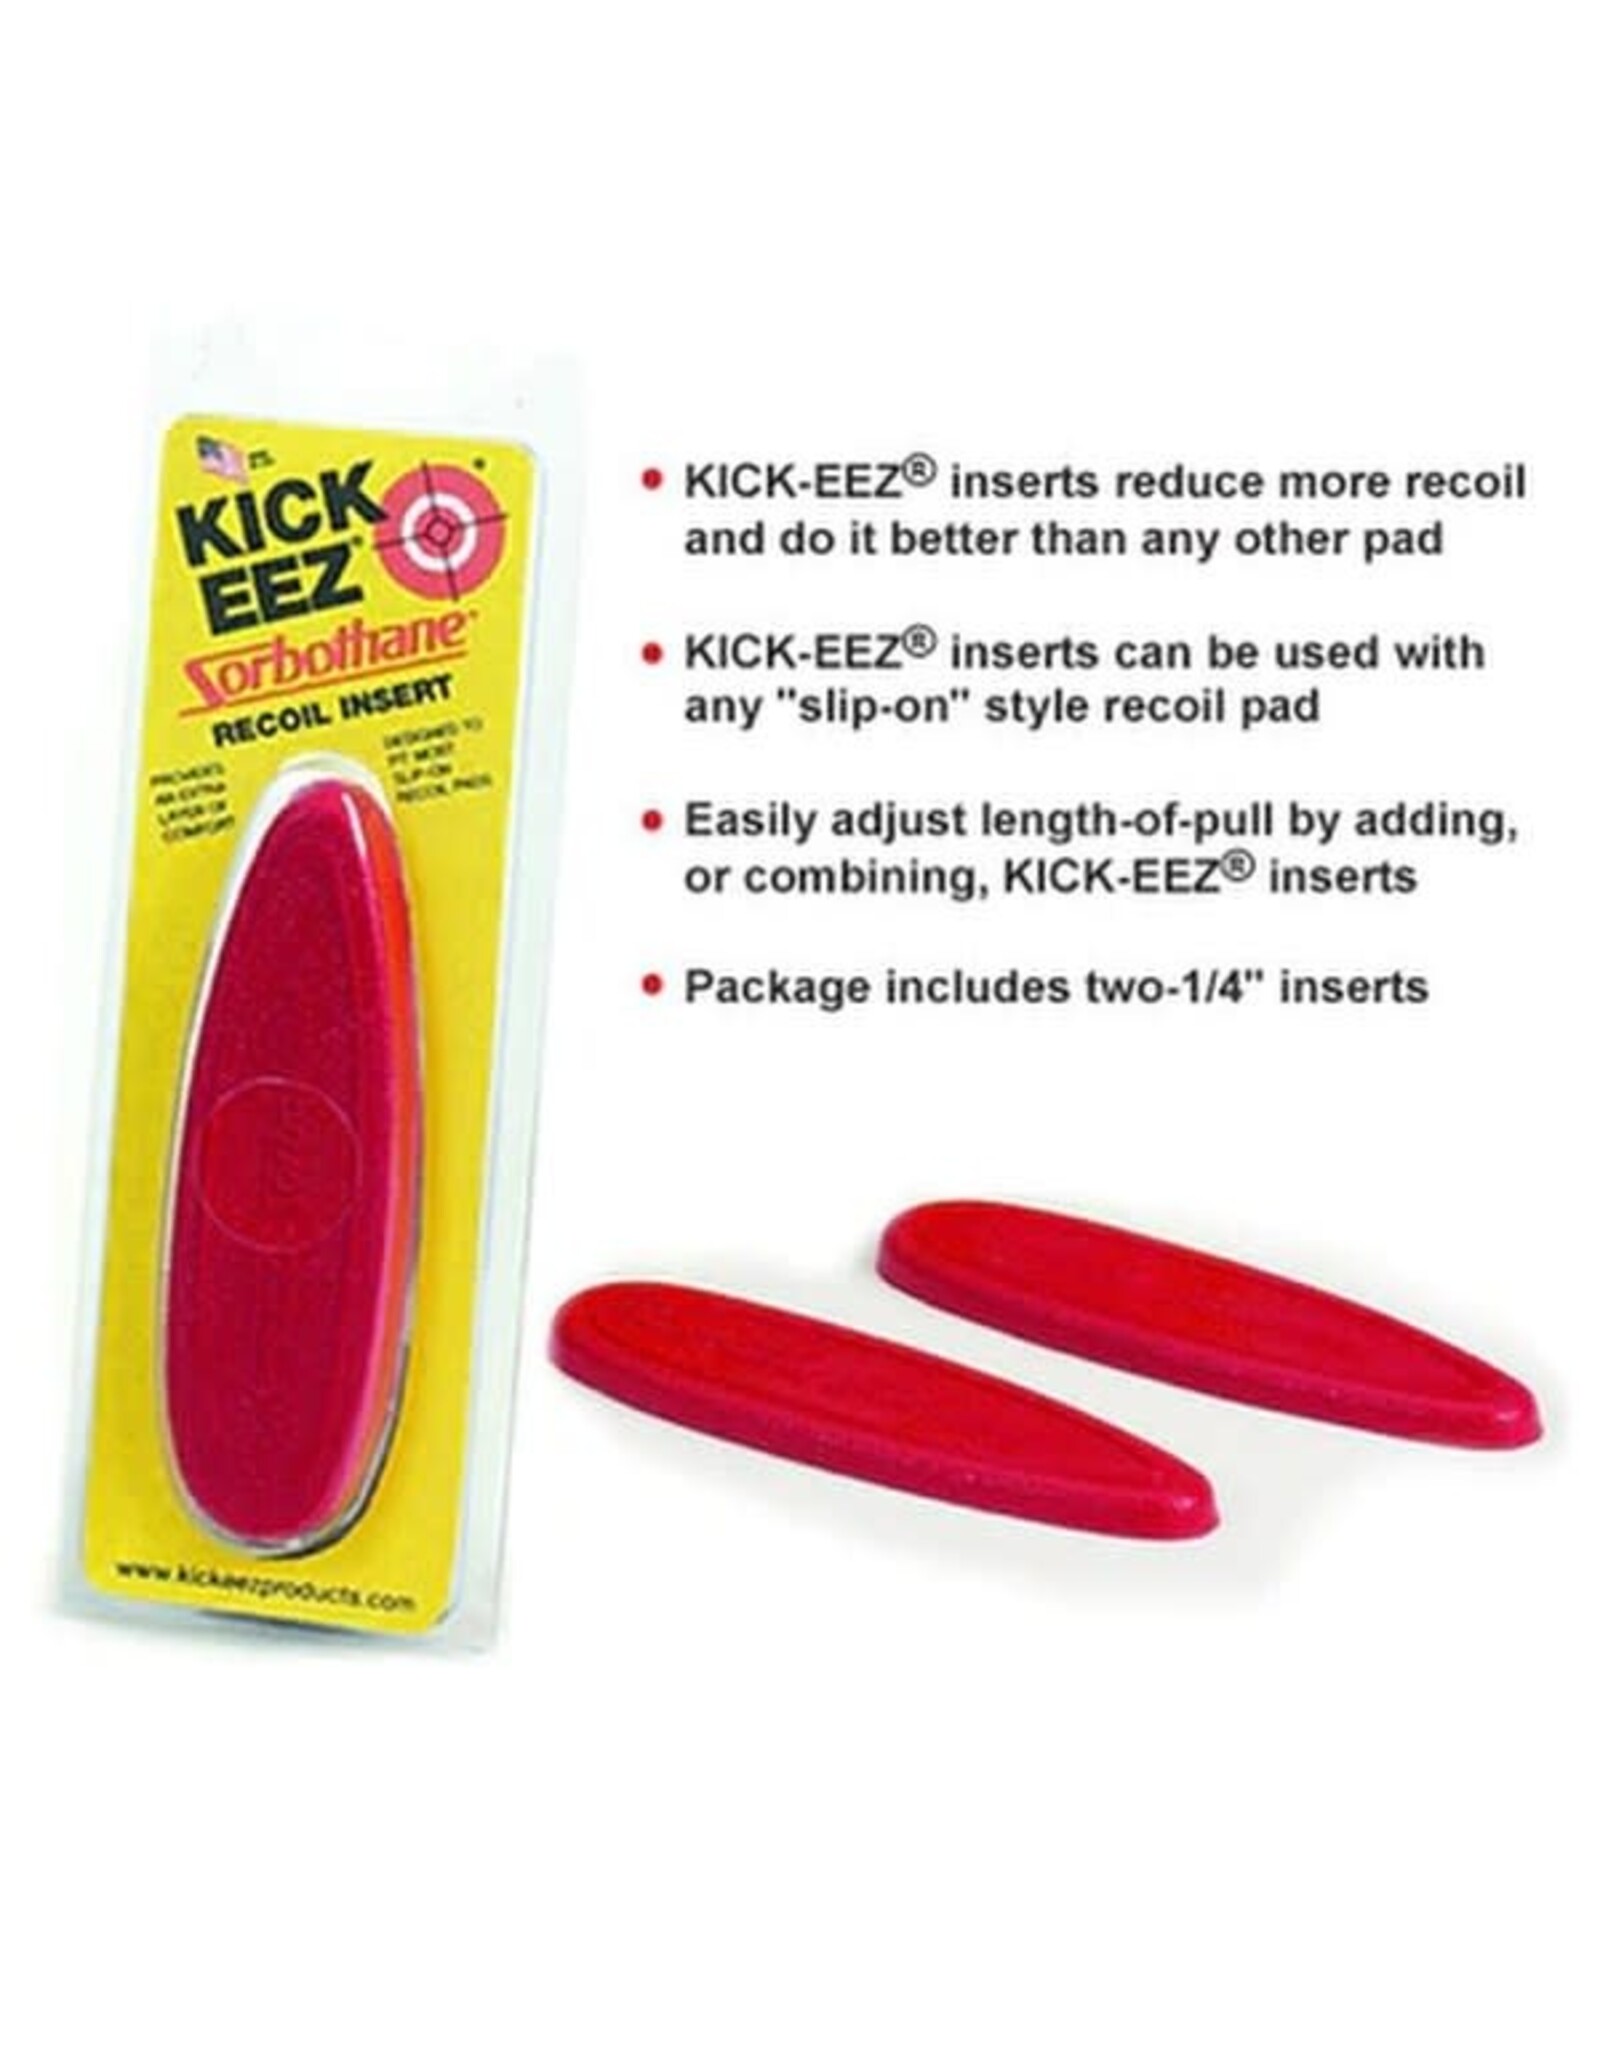 Kick-Eez Recoil Pad Insert - For ANY Slip On Pad - Size Medium